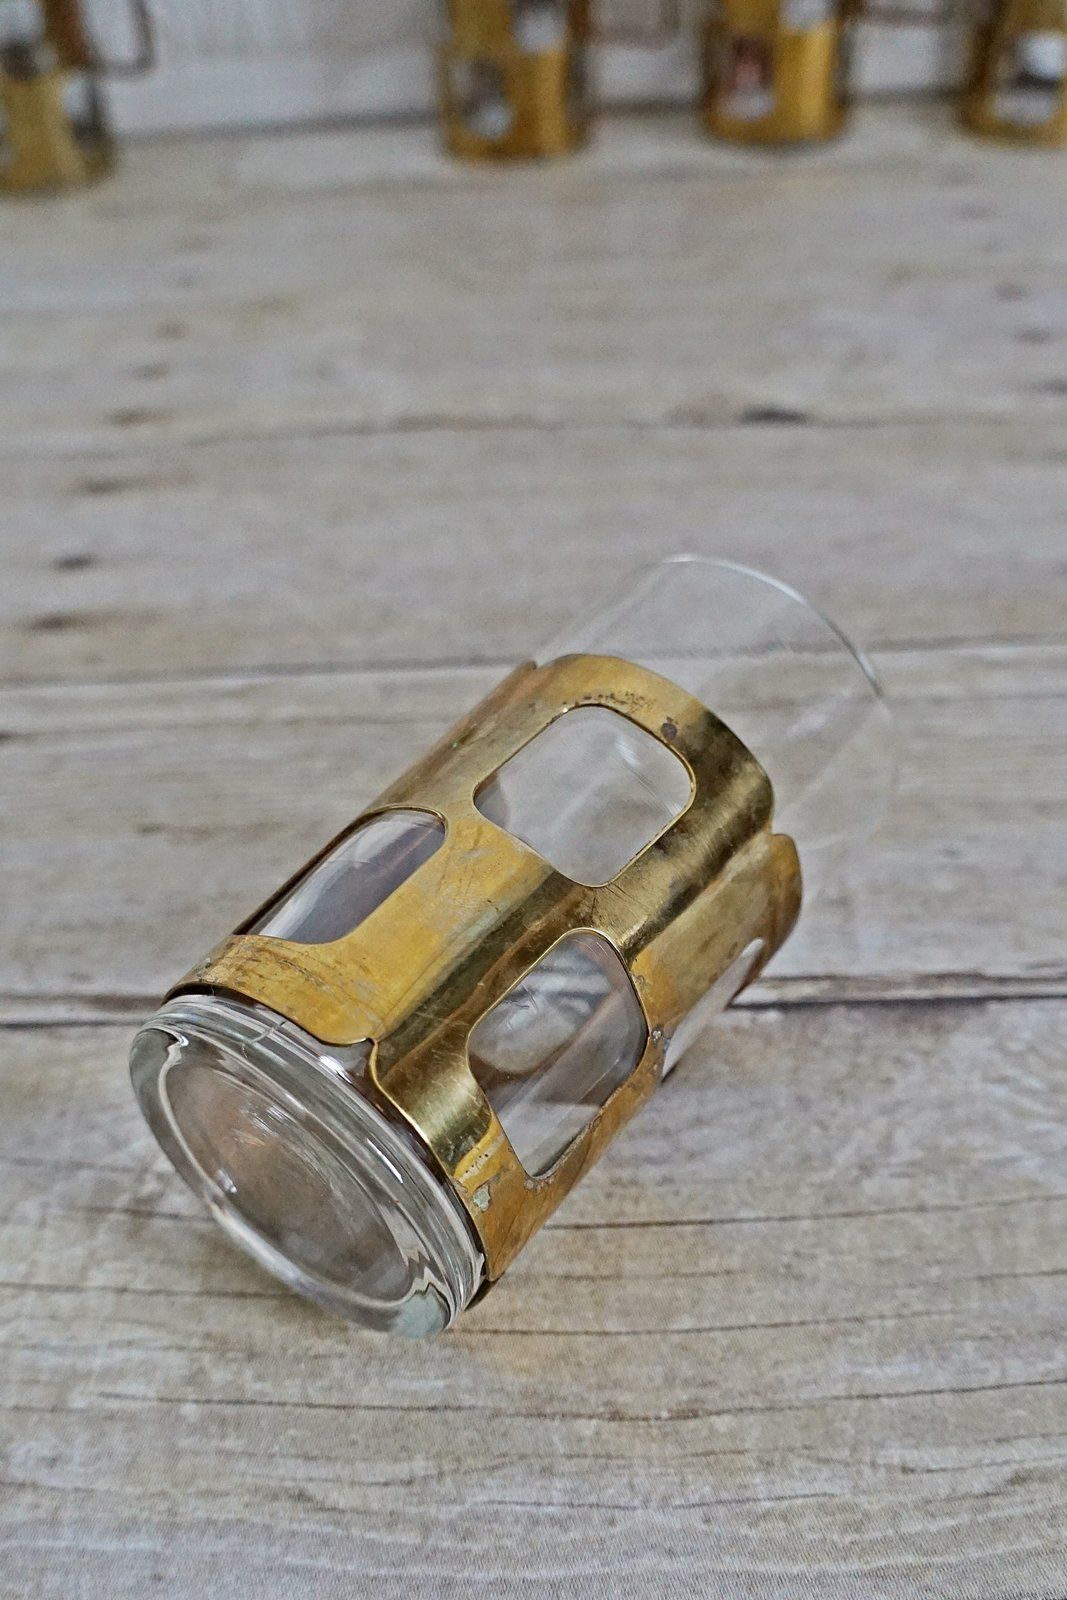 Mid Century Copper Beverage Glass Set-closiTherapi | vinTage